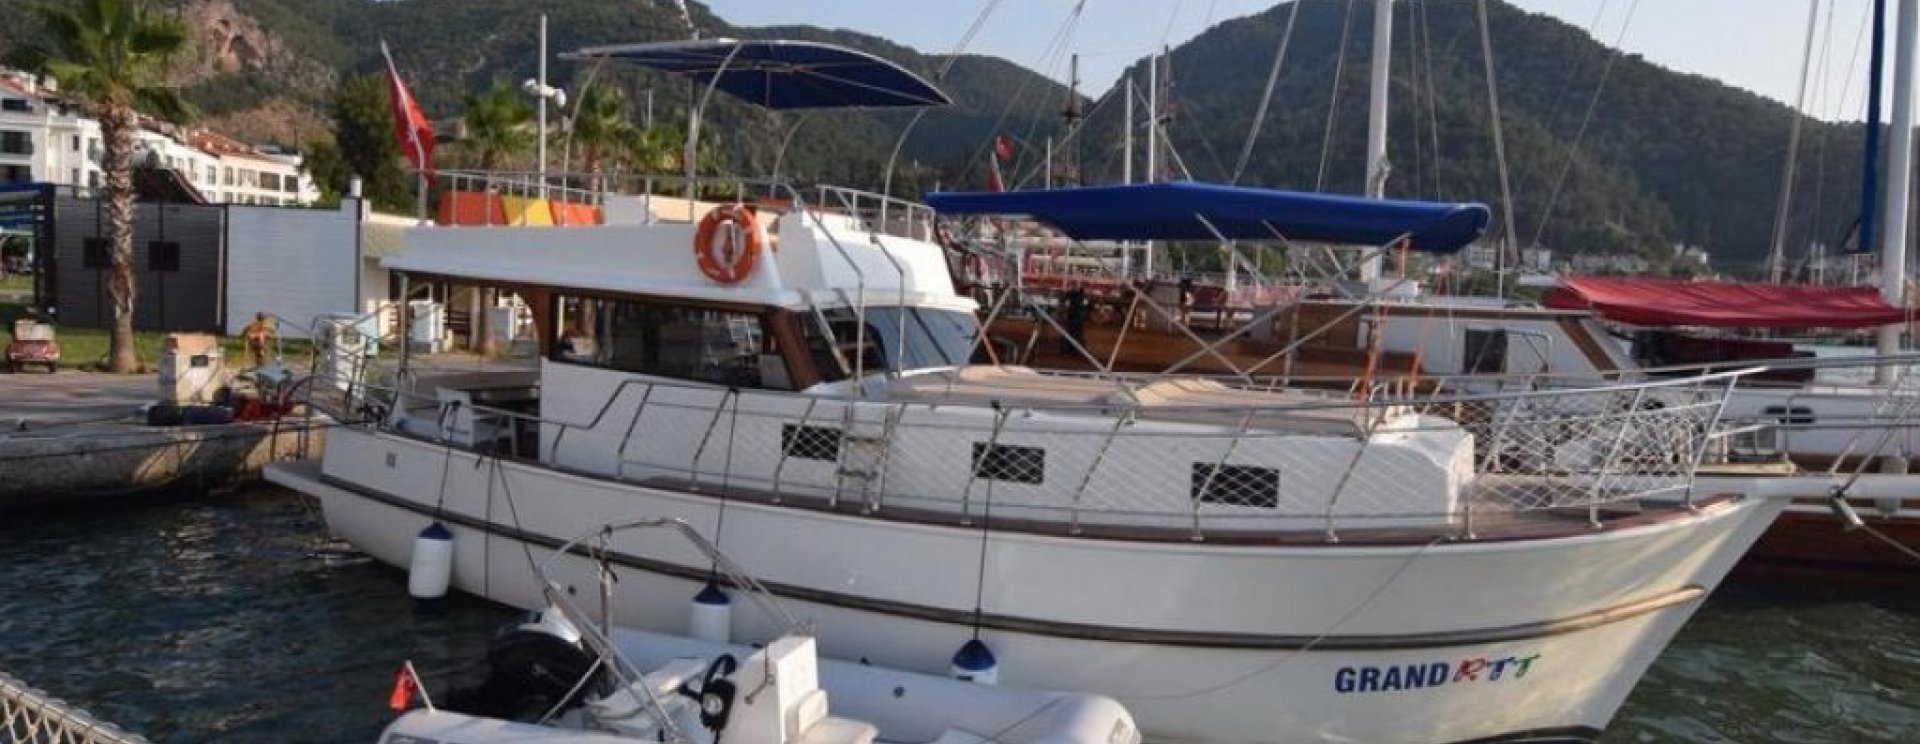 RTT Yachting Fethiye Kiralık Gulet